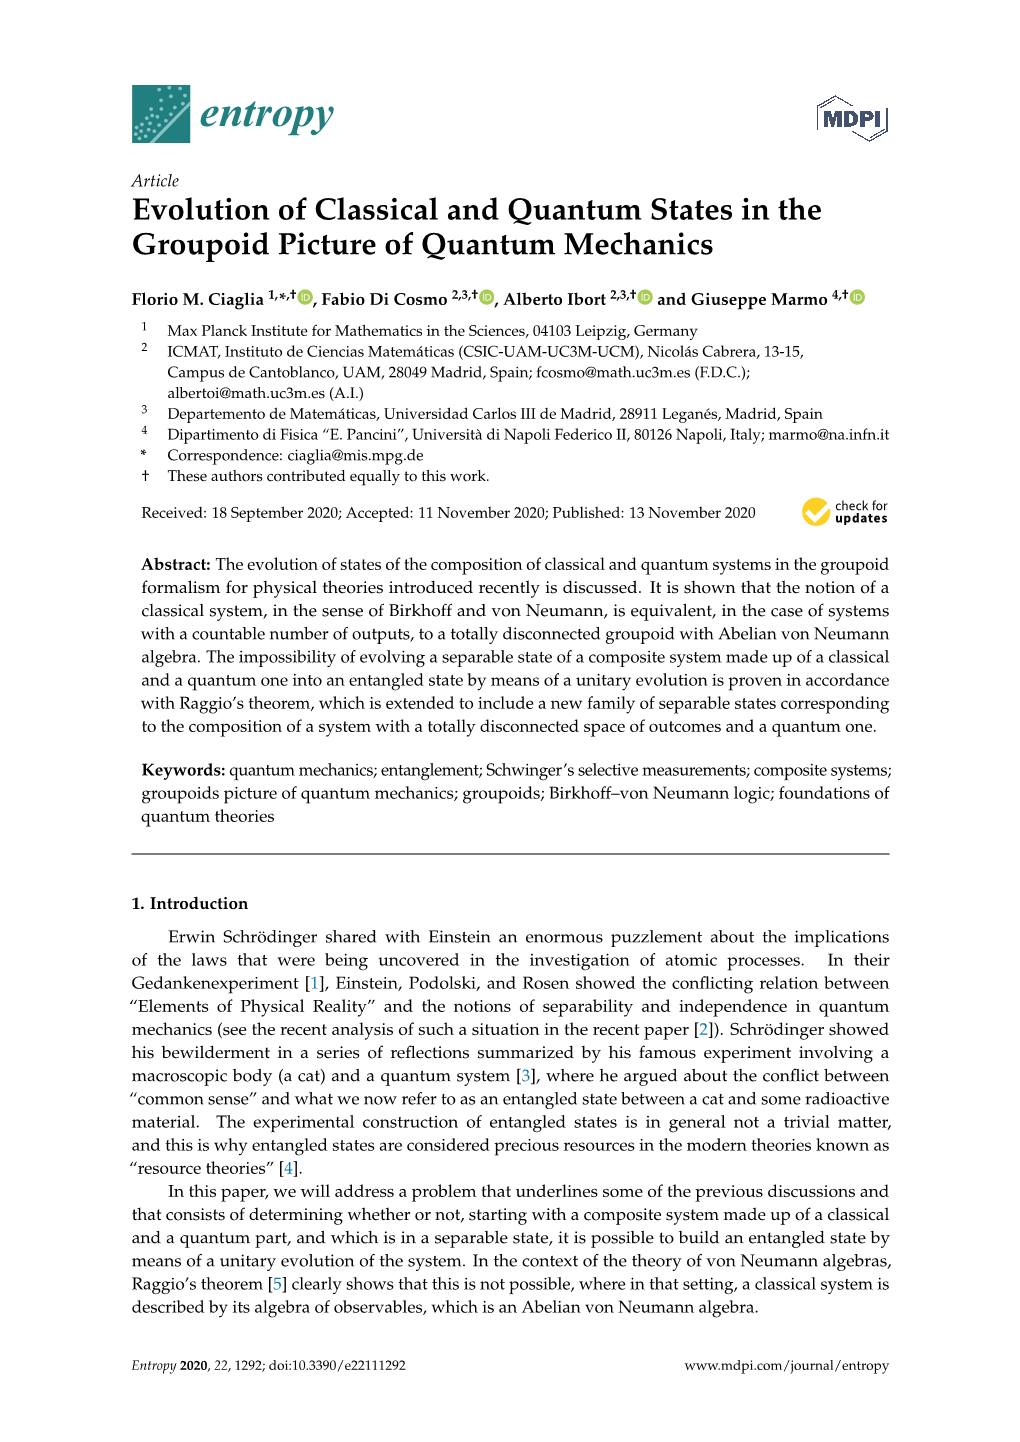 Evolution of Classical and Quantum States in the Groupoid Picture of Quantum Mechanics